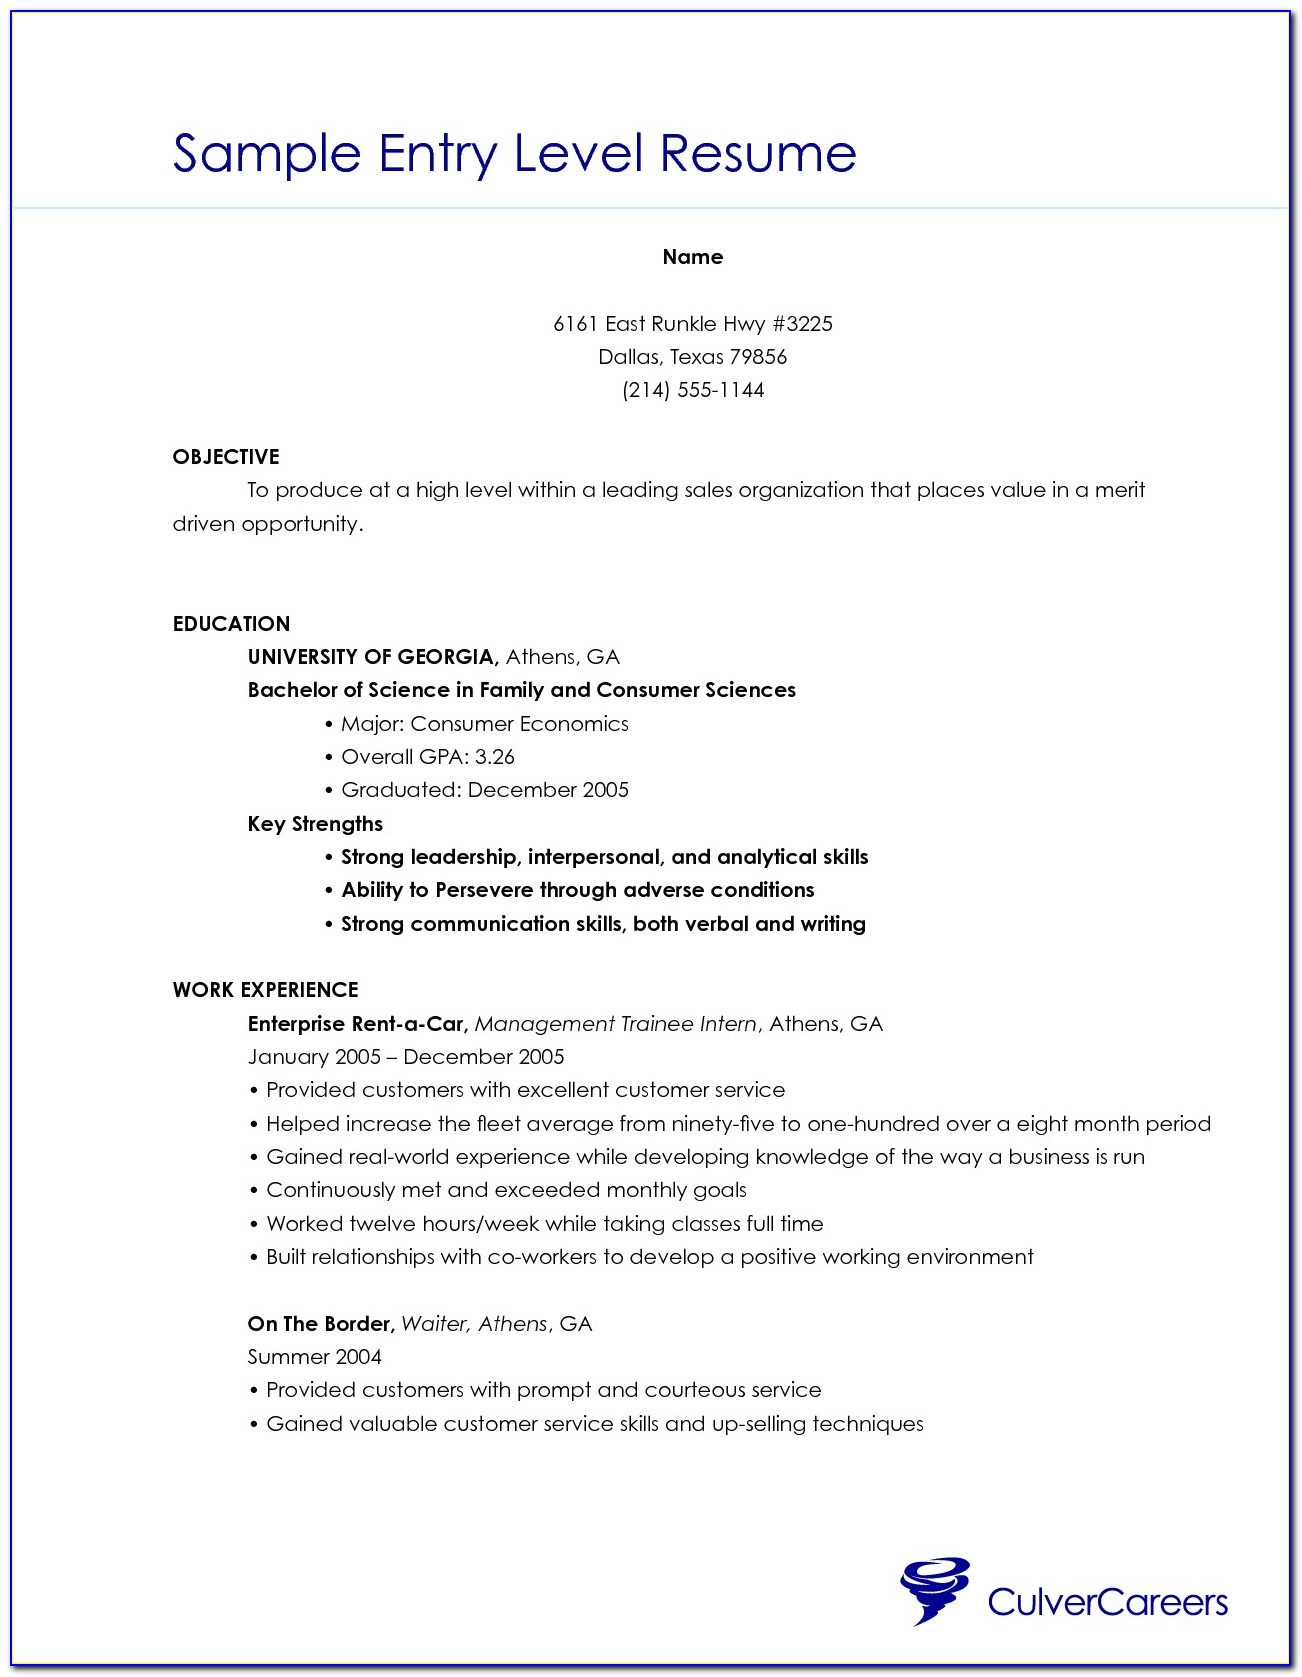 Entry Level Resume Templates Free Resume Objective Entry Level Resume Ideas